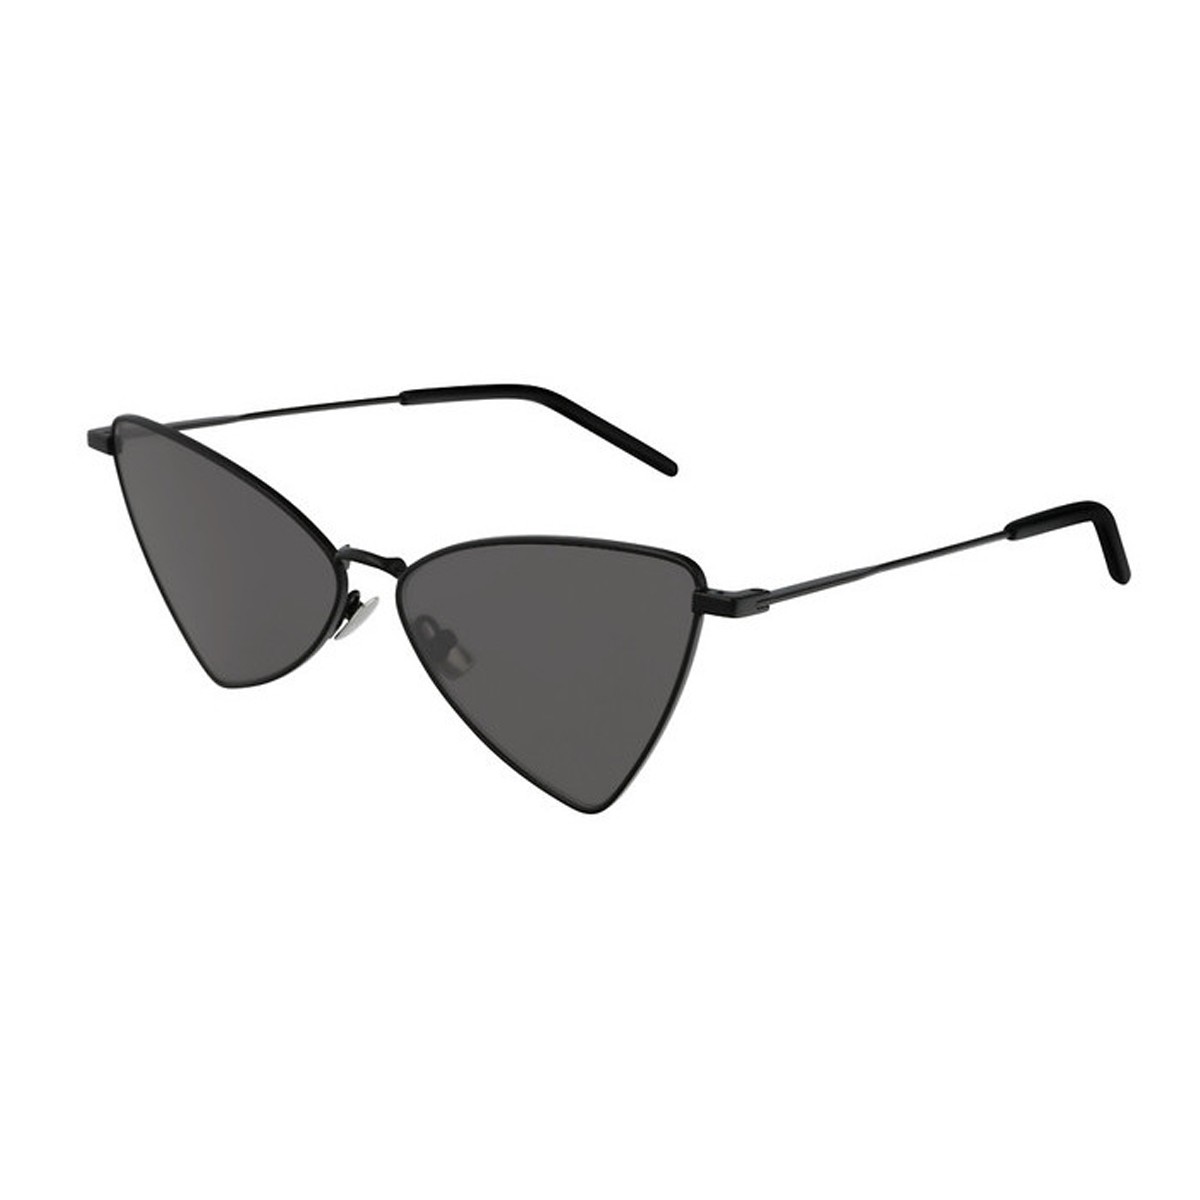 Saint Laurent SL303 | Women's sunglasses